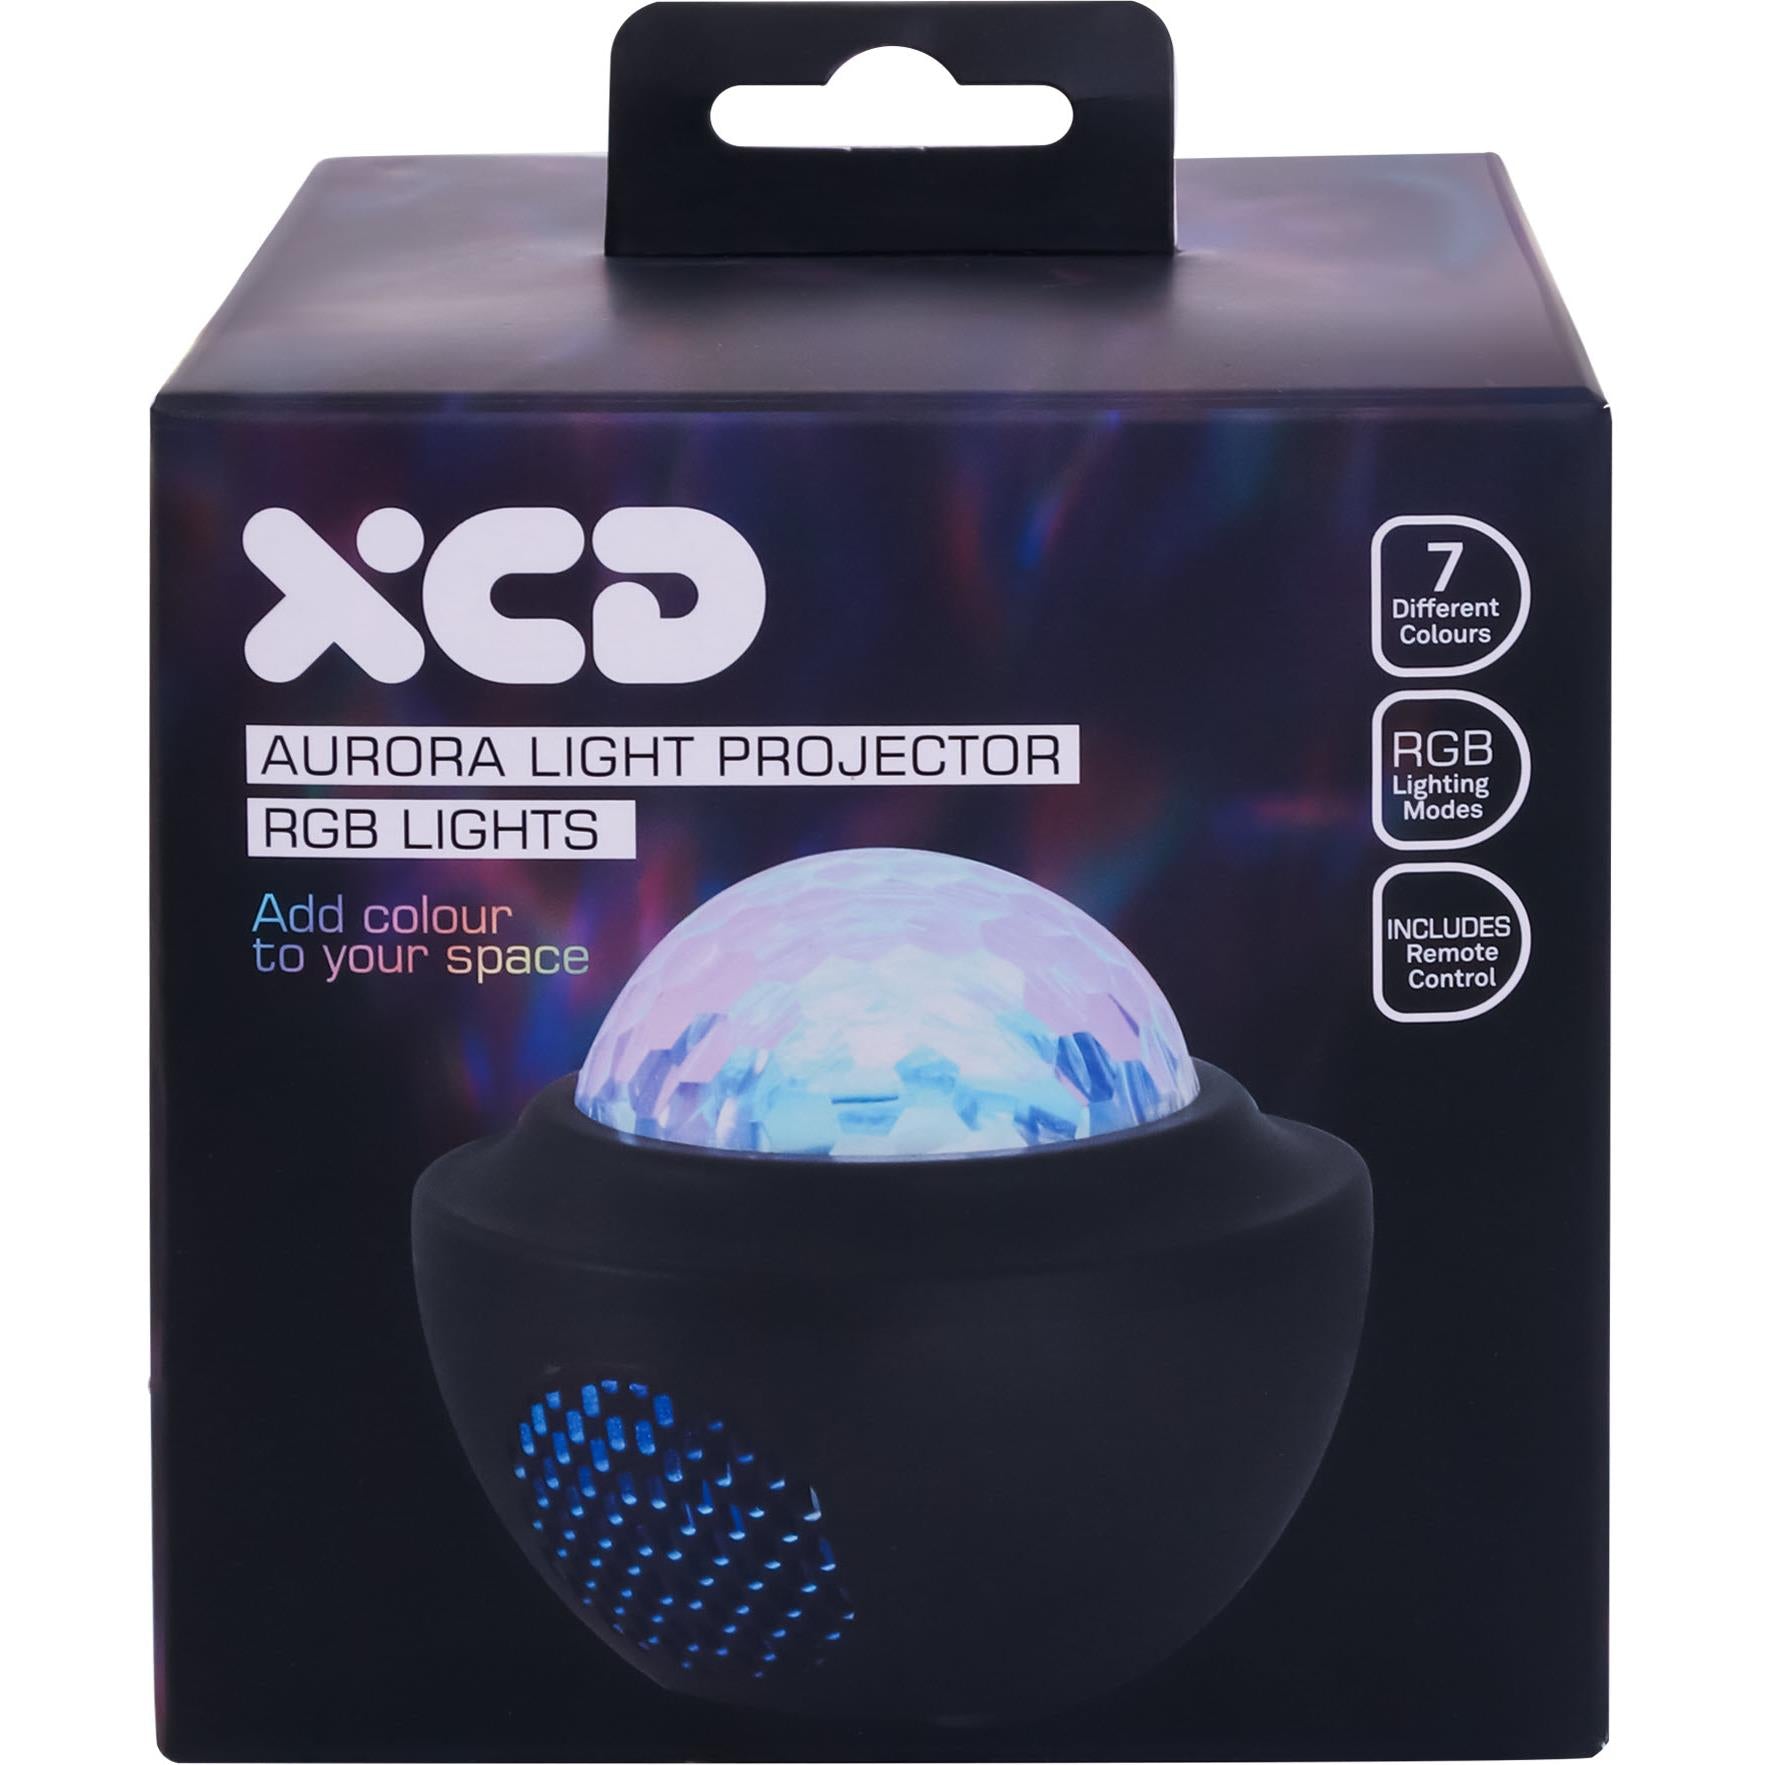 xcd aurora light projector